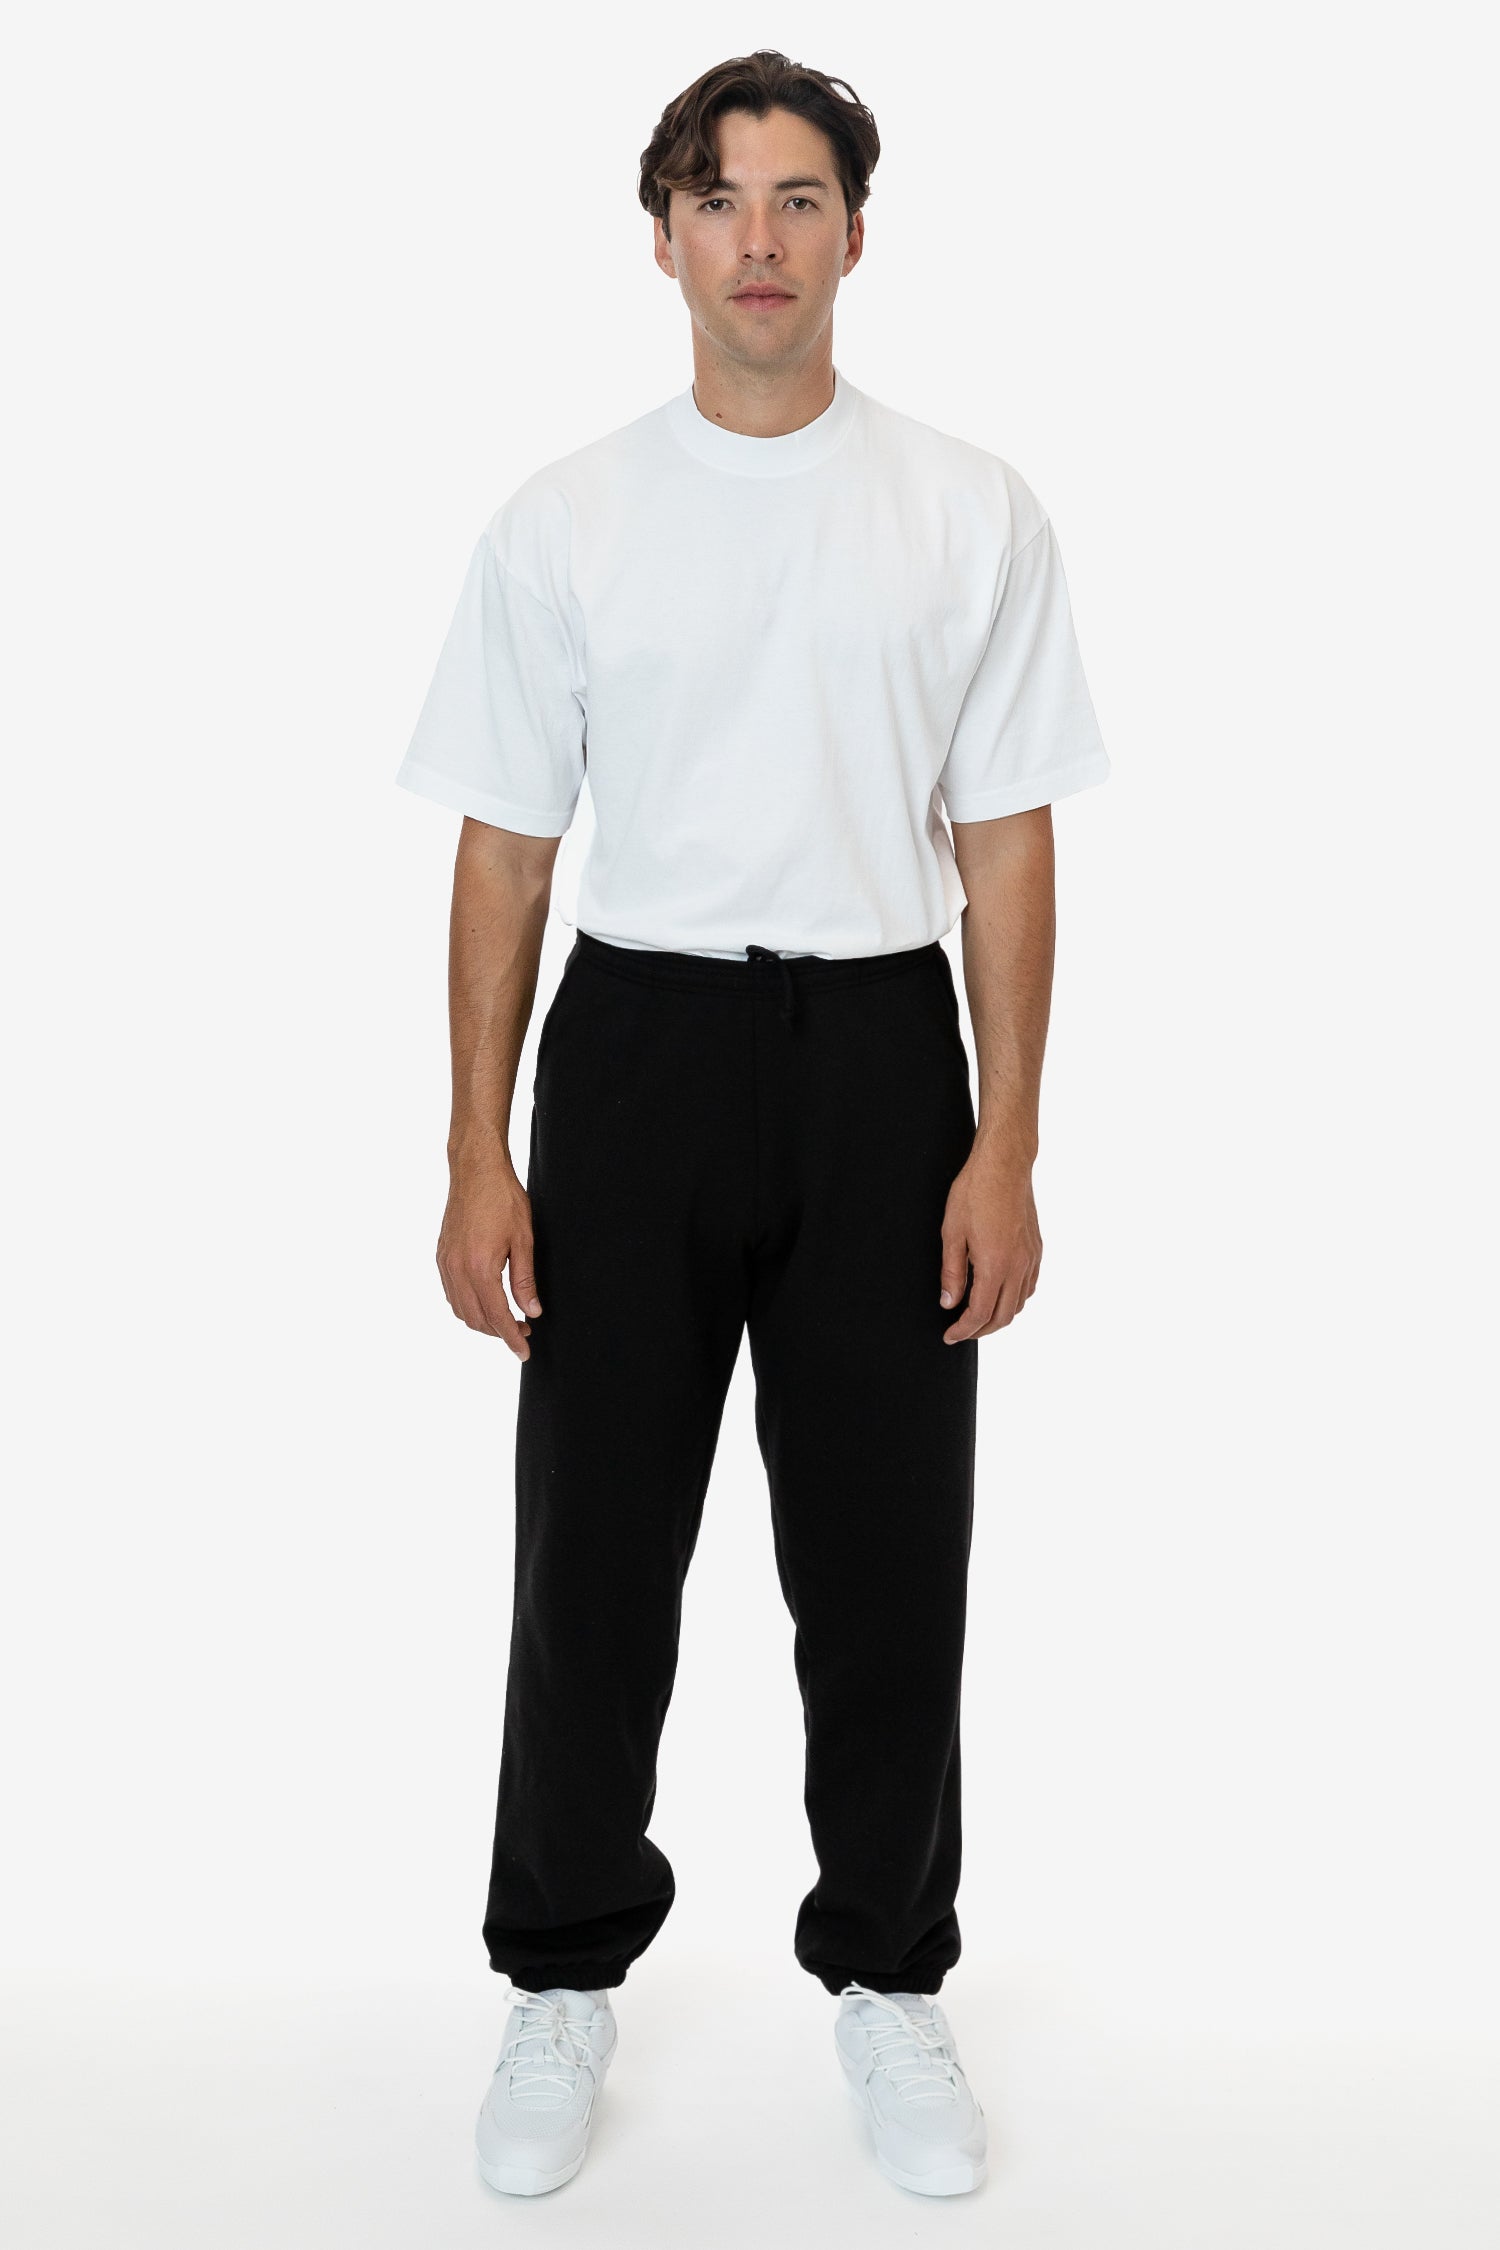 Wholesale Men's 4 Pocket Fleece Sweatpants, S-XL, Black